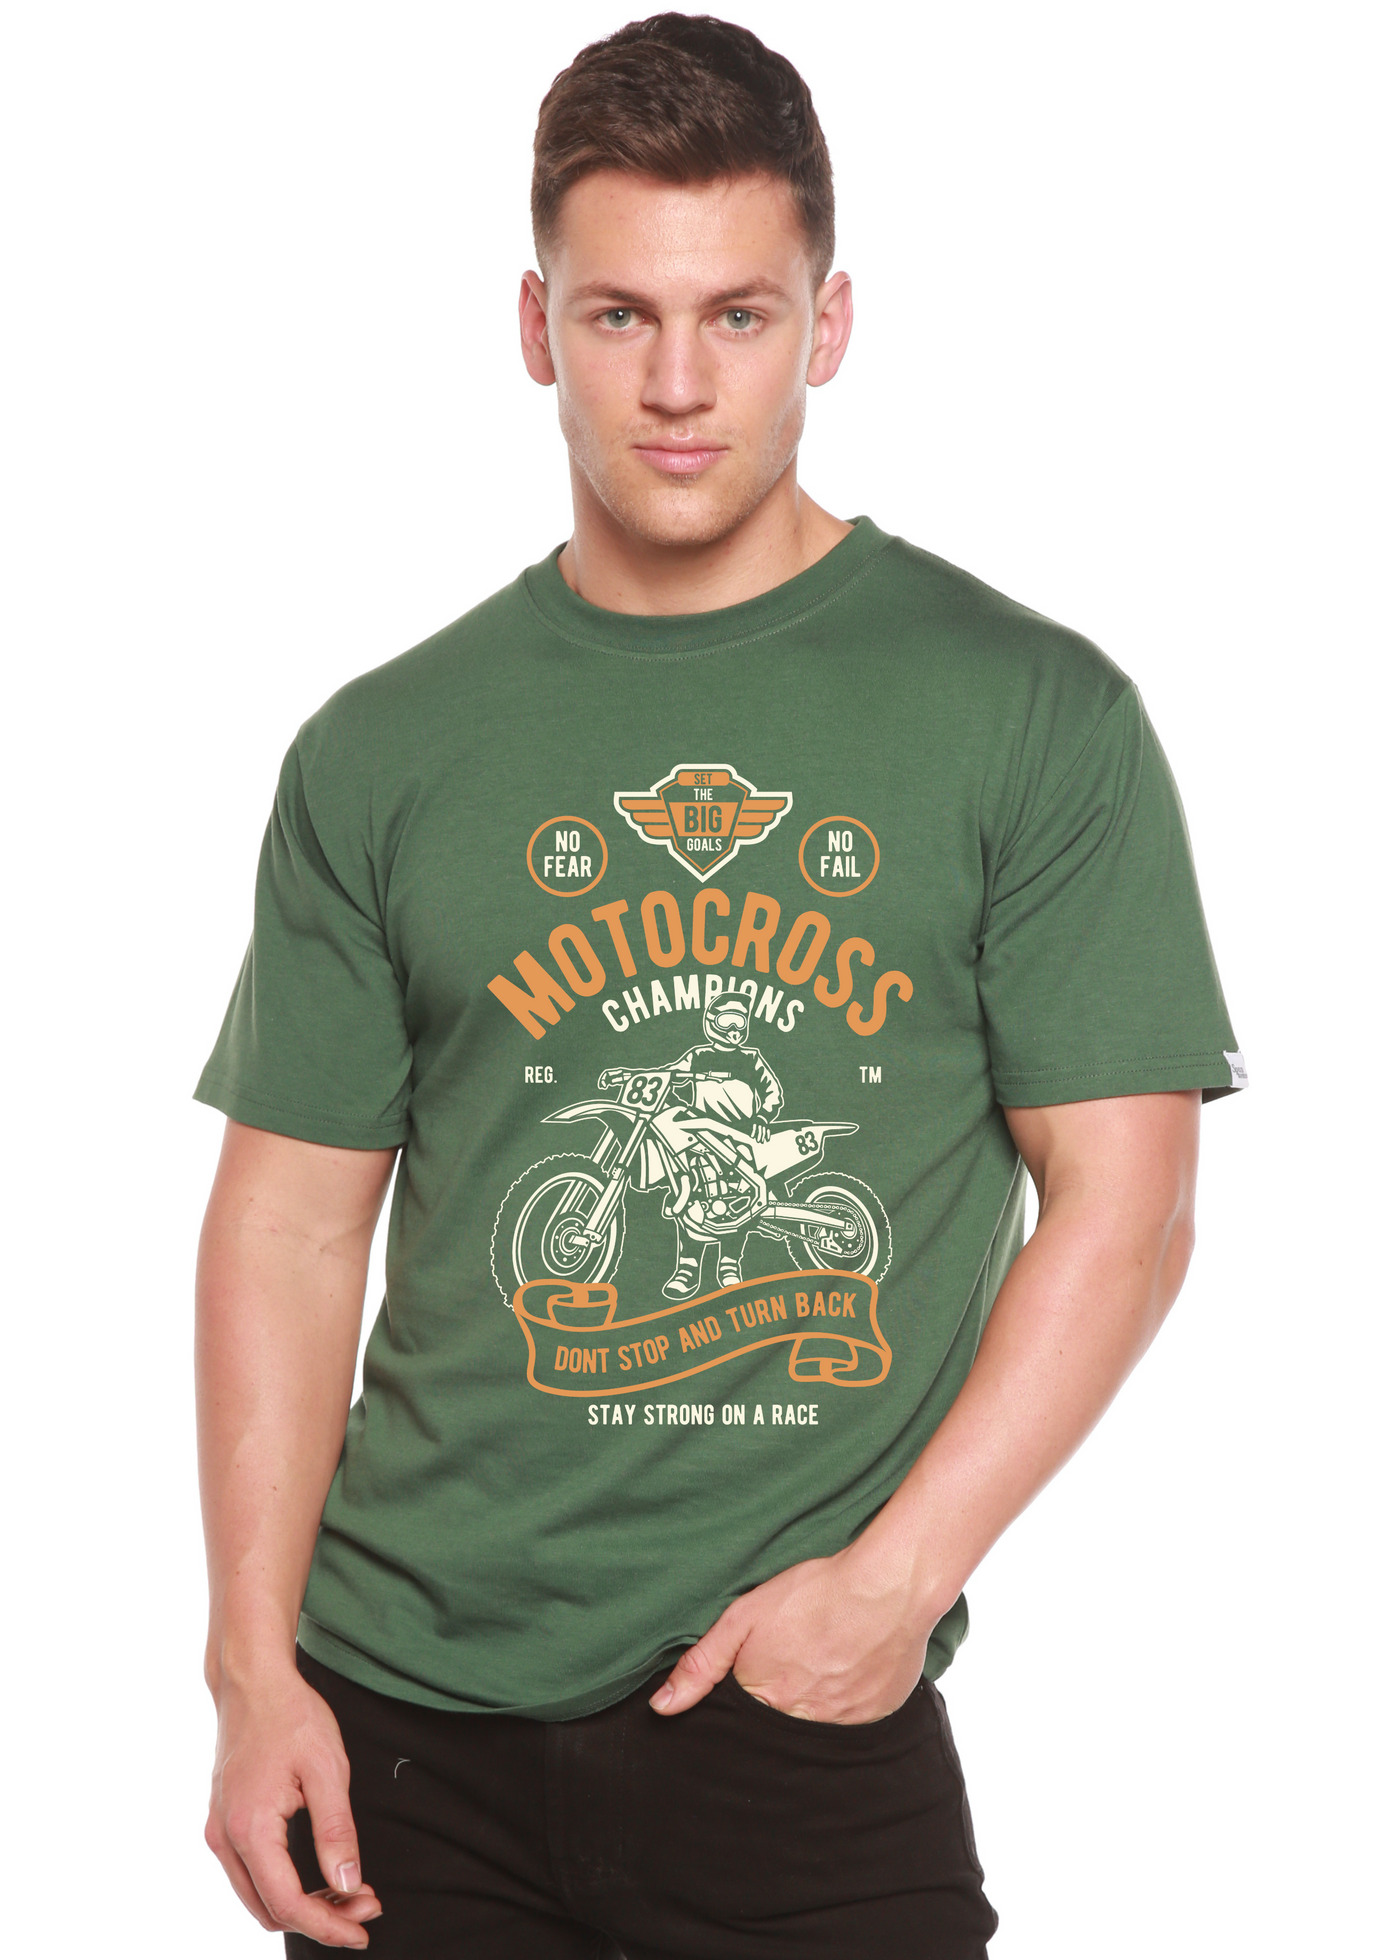 Motocross Champions men's bamboo tshirt pine green